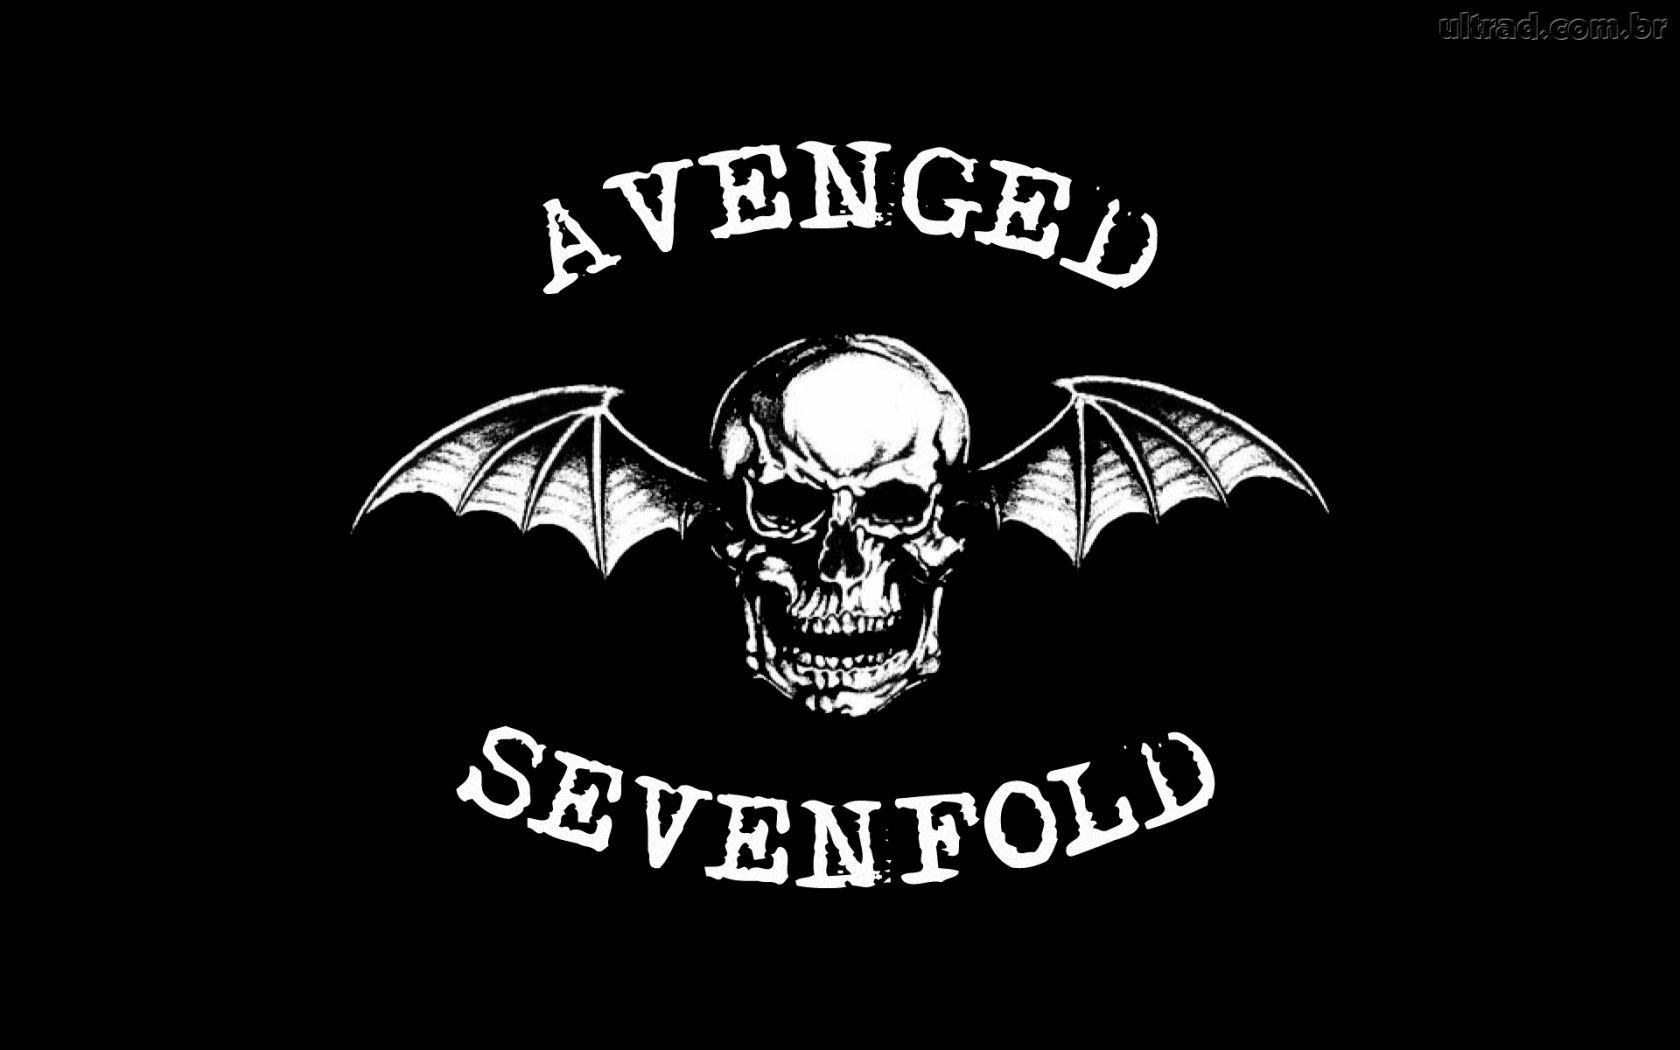 Download Avenged Sevenfold Wallpaper, HD Background Download